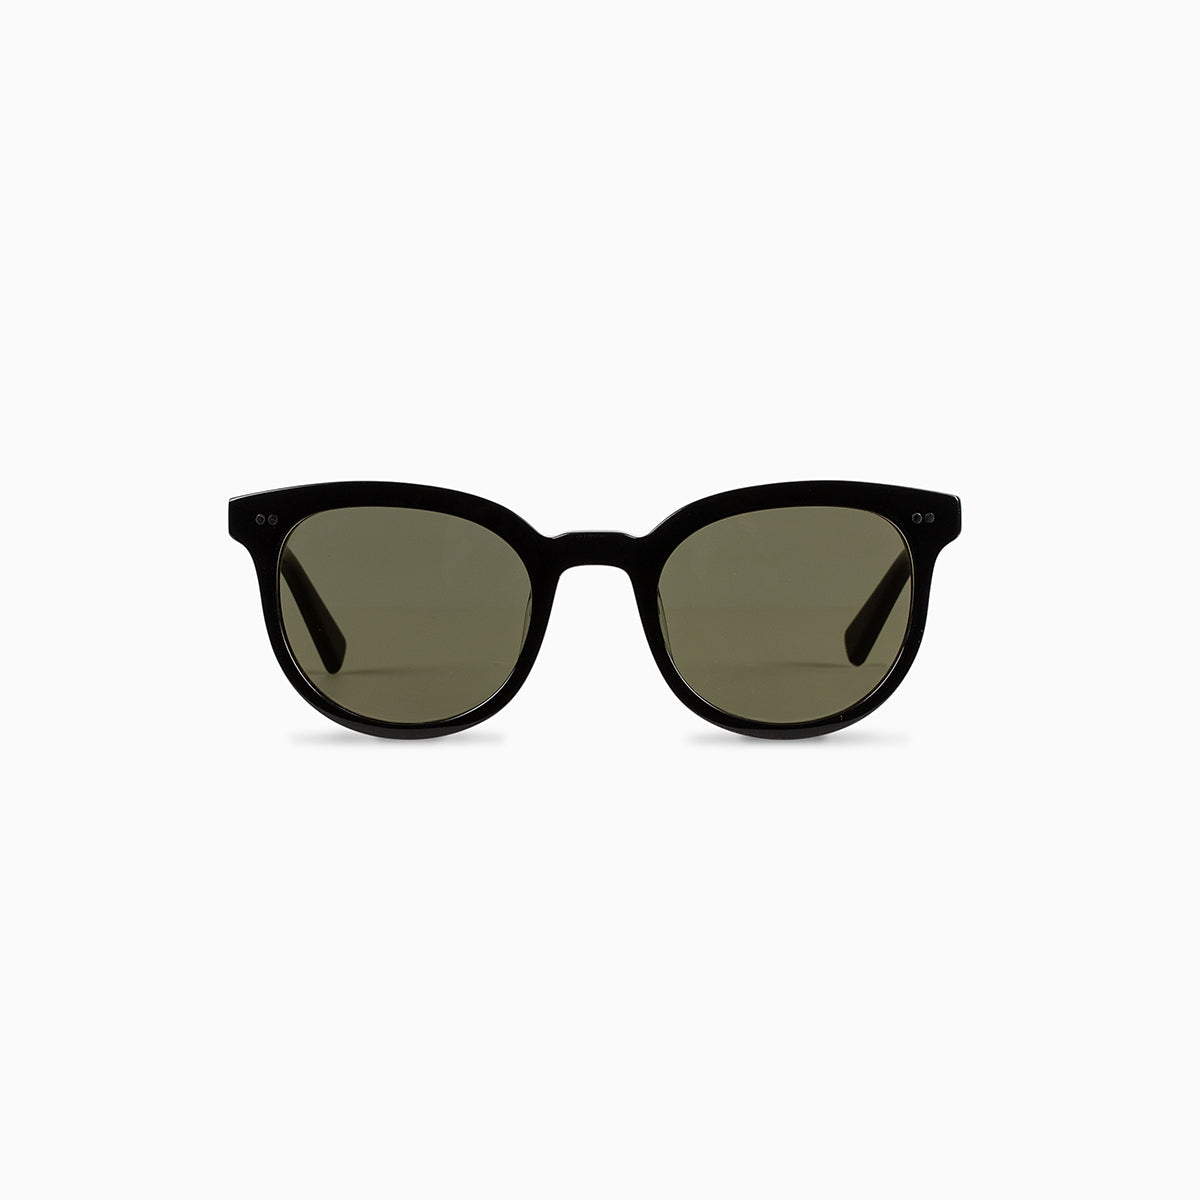 Round Wayfarer Sunglasses | Black | Product Image | Uncommon James Home